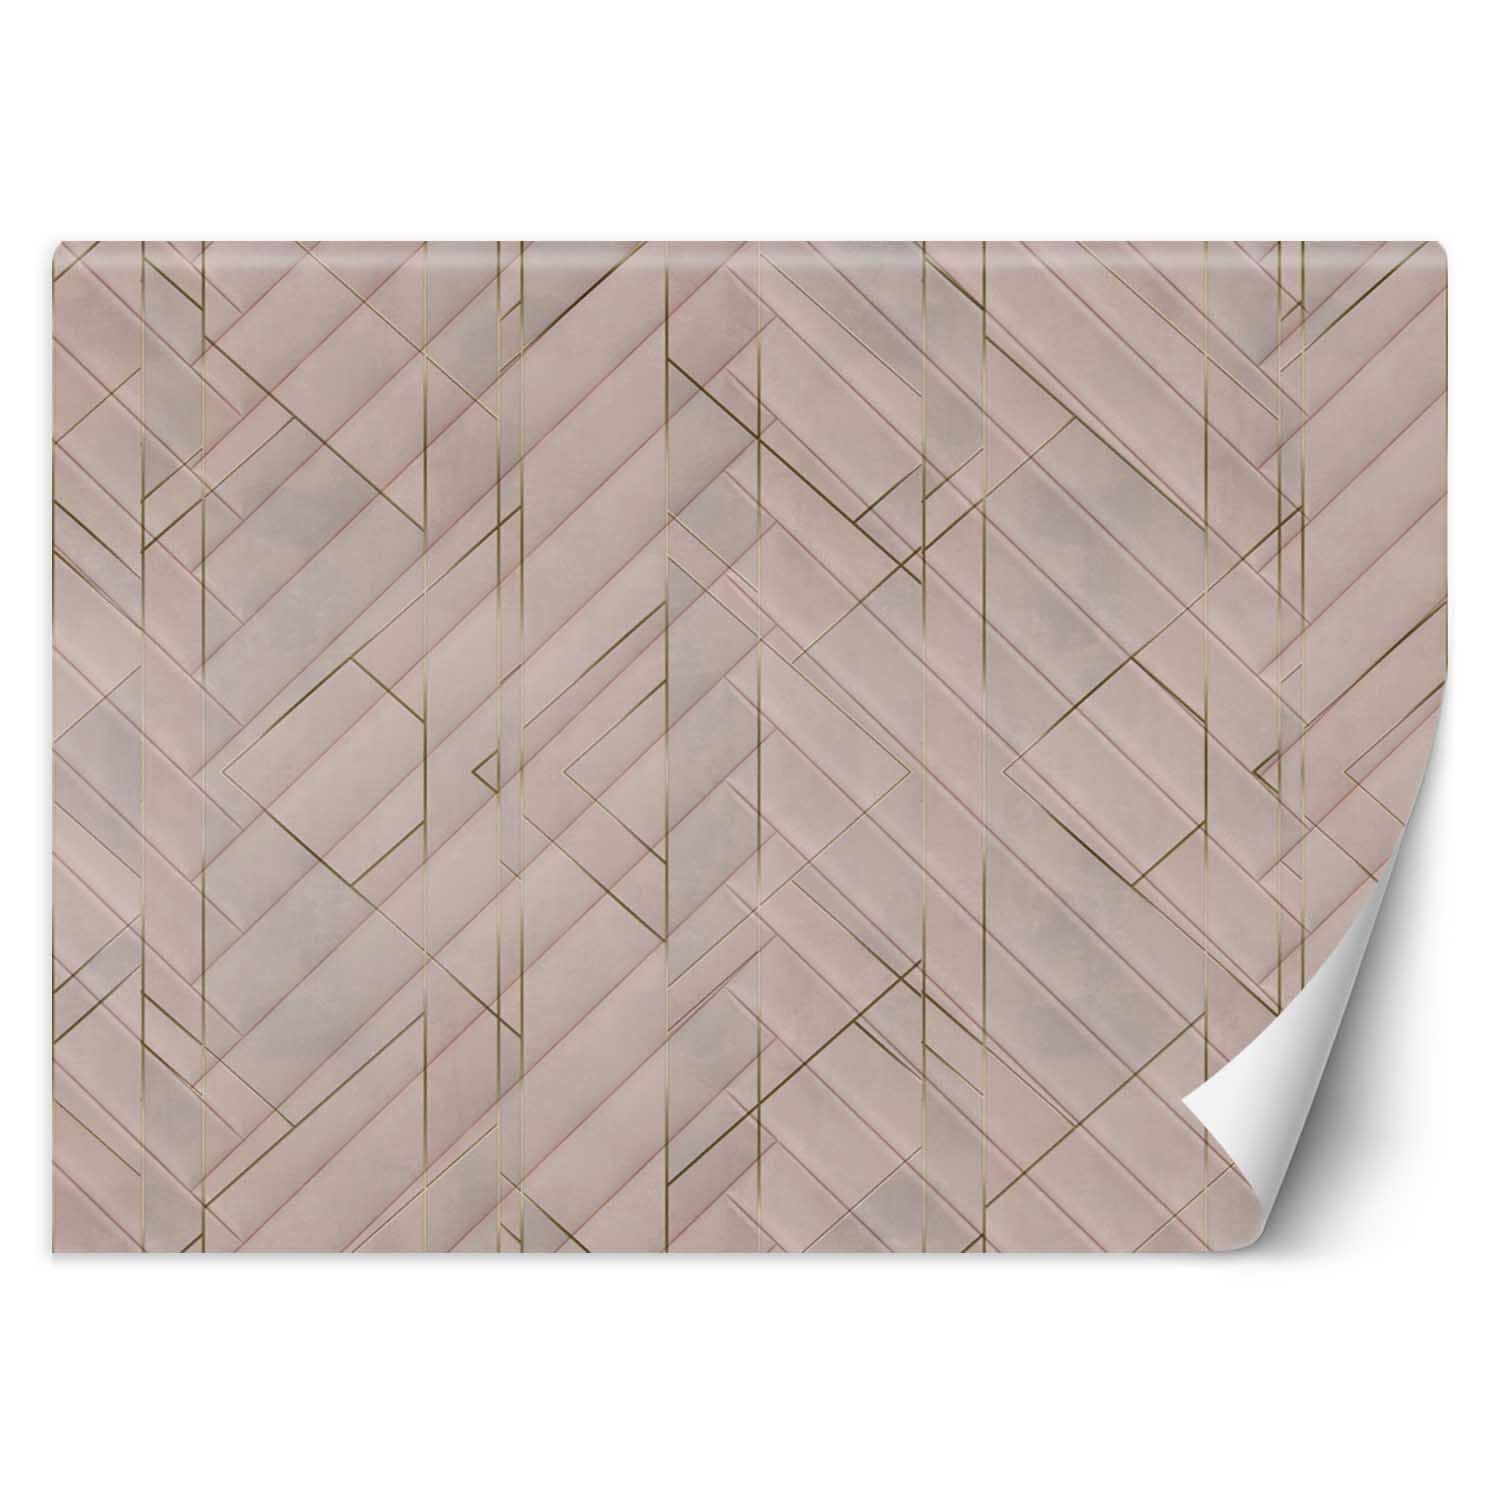 Trend24 – Behang – Geometrisch Patroon – Vliesbehang – Behang Woonkamer – Fotobehang – 350x245x2 cm – Incl. behanglijm